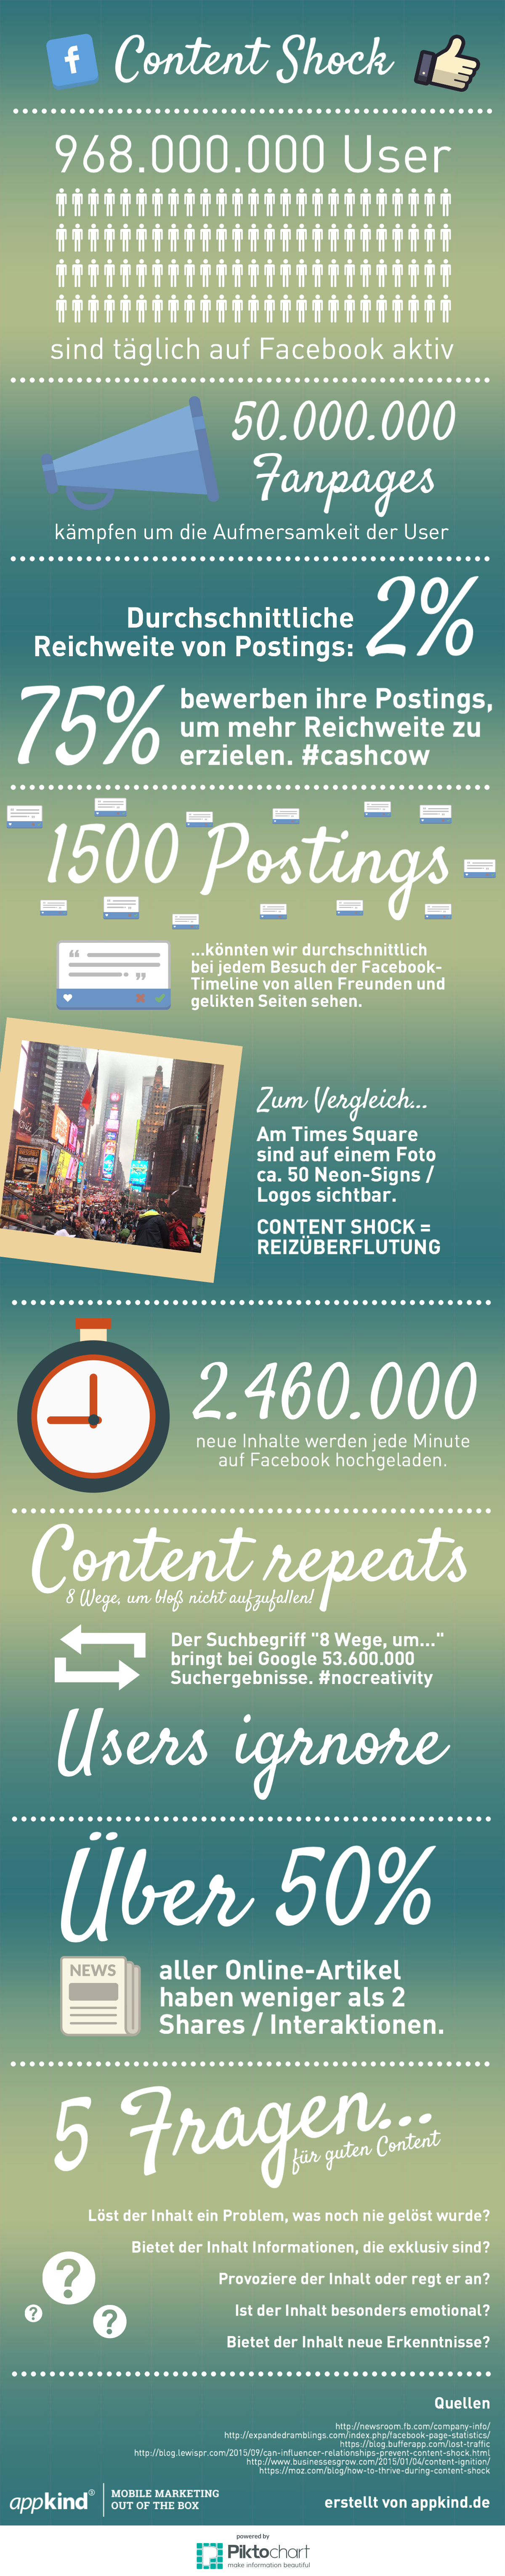 infografik_contentshock